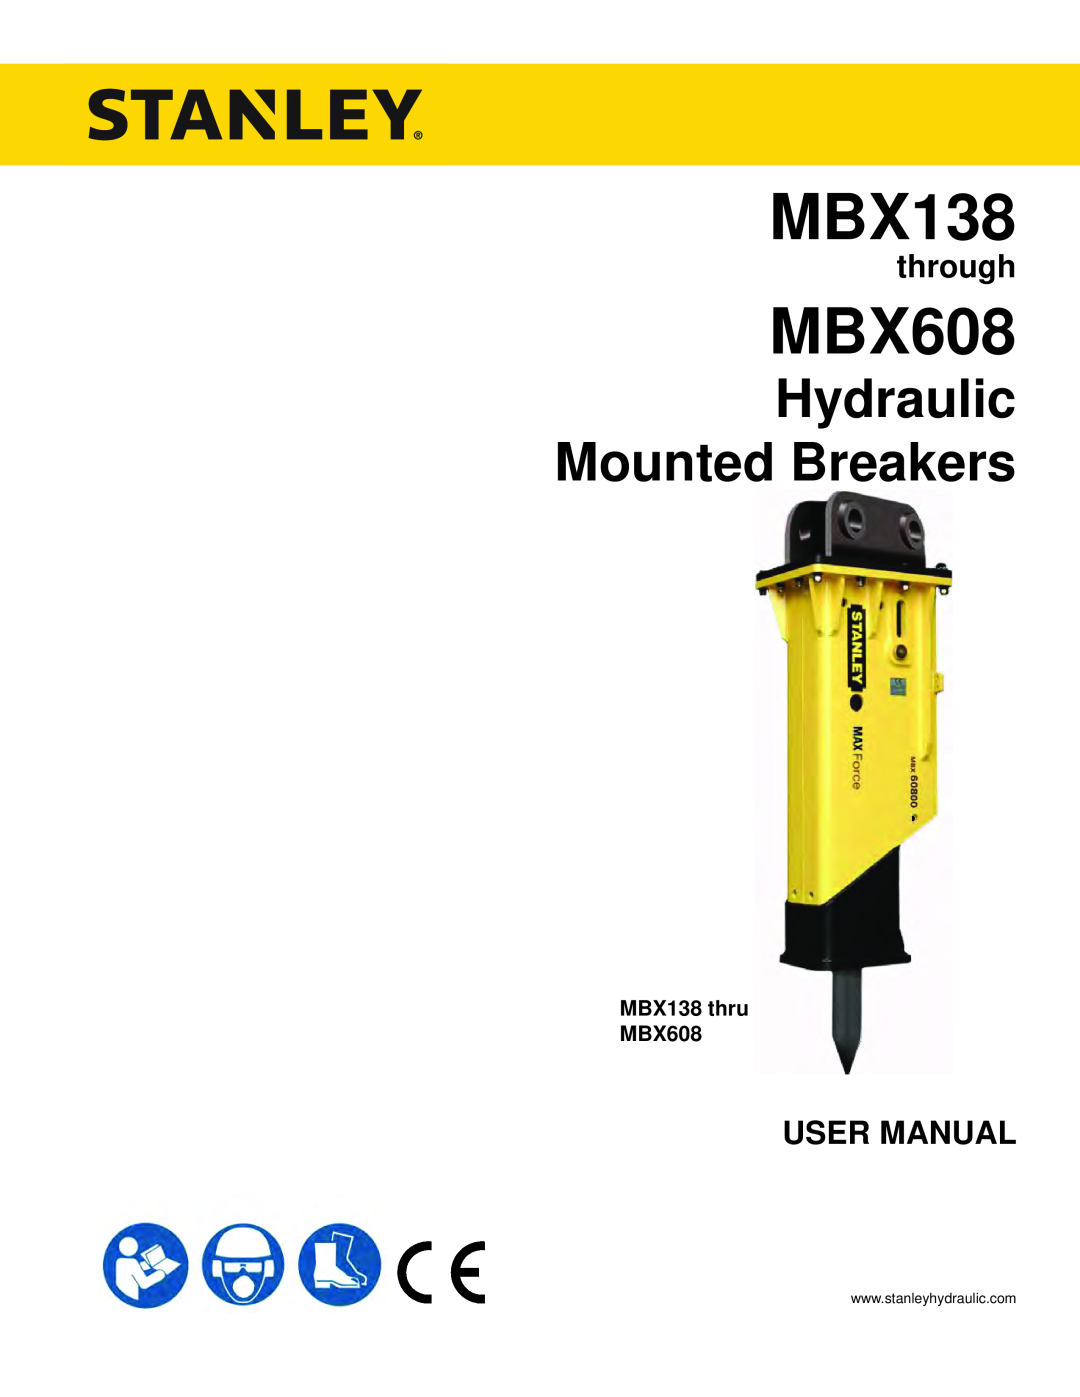 Stanley Black & Decker MBX138 thru MBX608 user manual through, User Manual, Hydraulic Mounted Breakers 